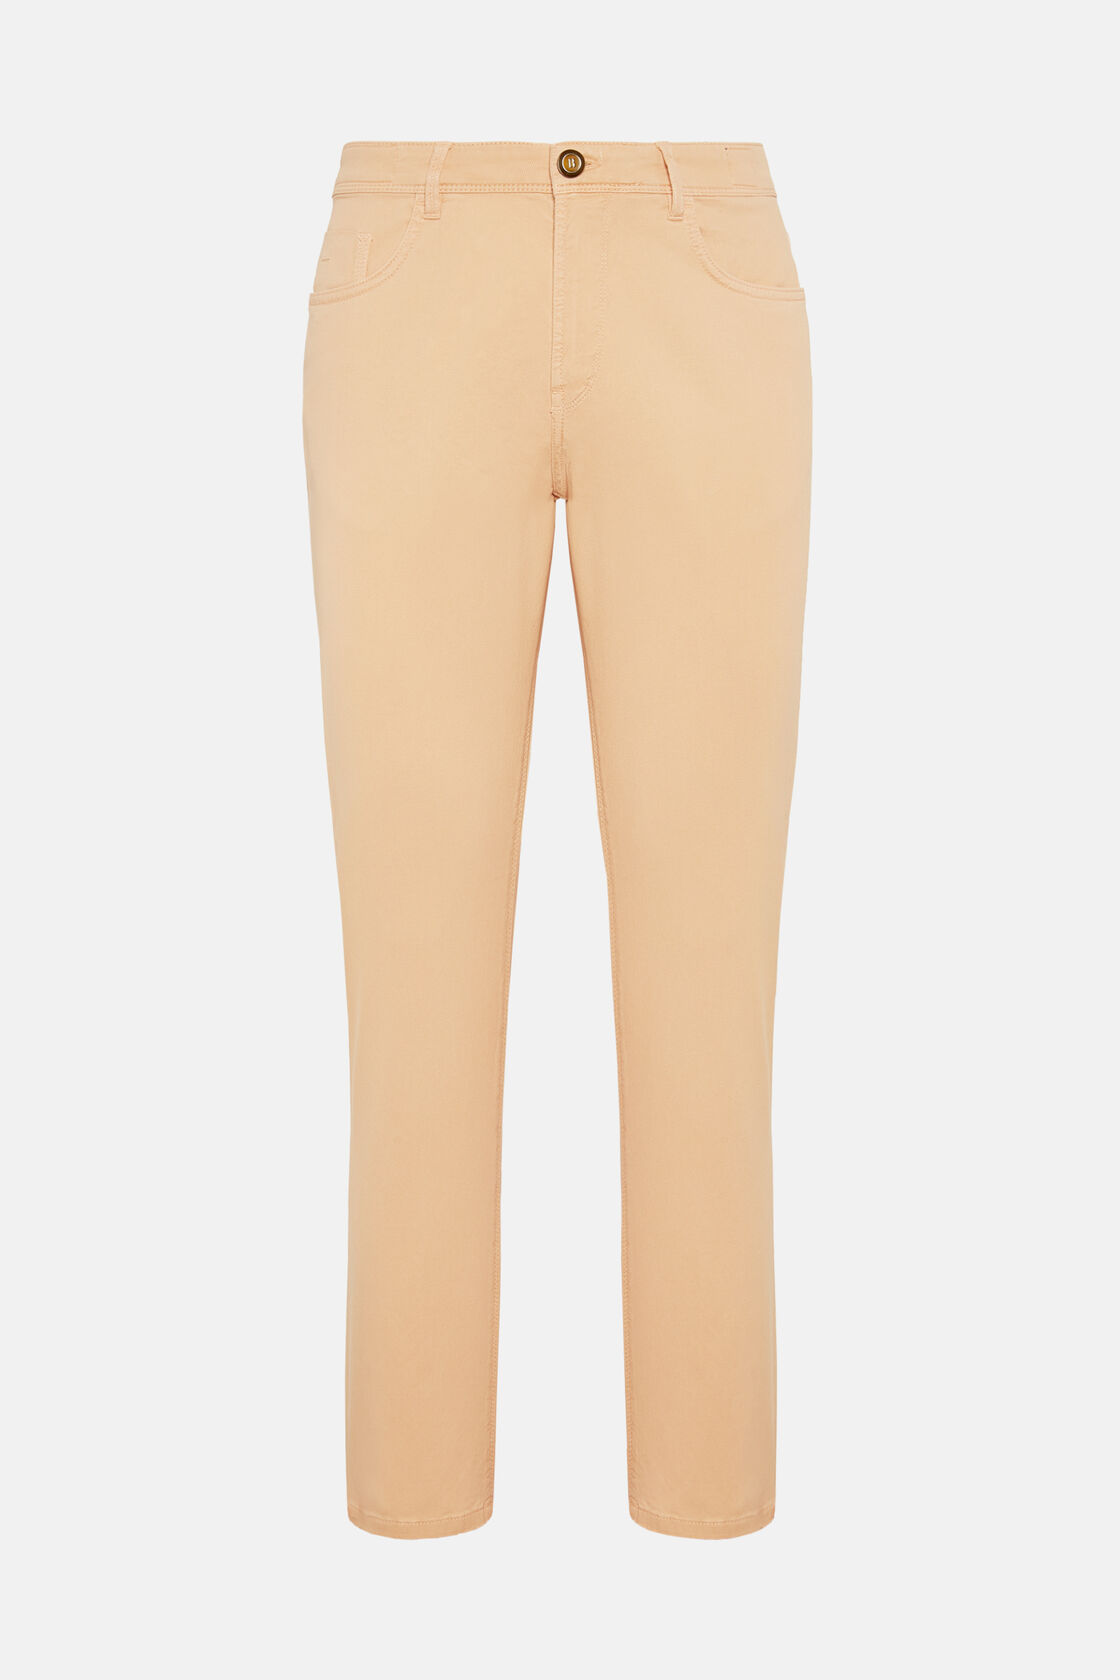 Jeans Aus Baumwoll-Tencel-Stretch, Orange, hi-res